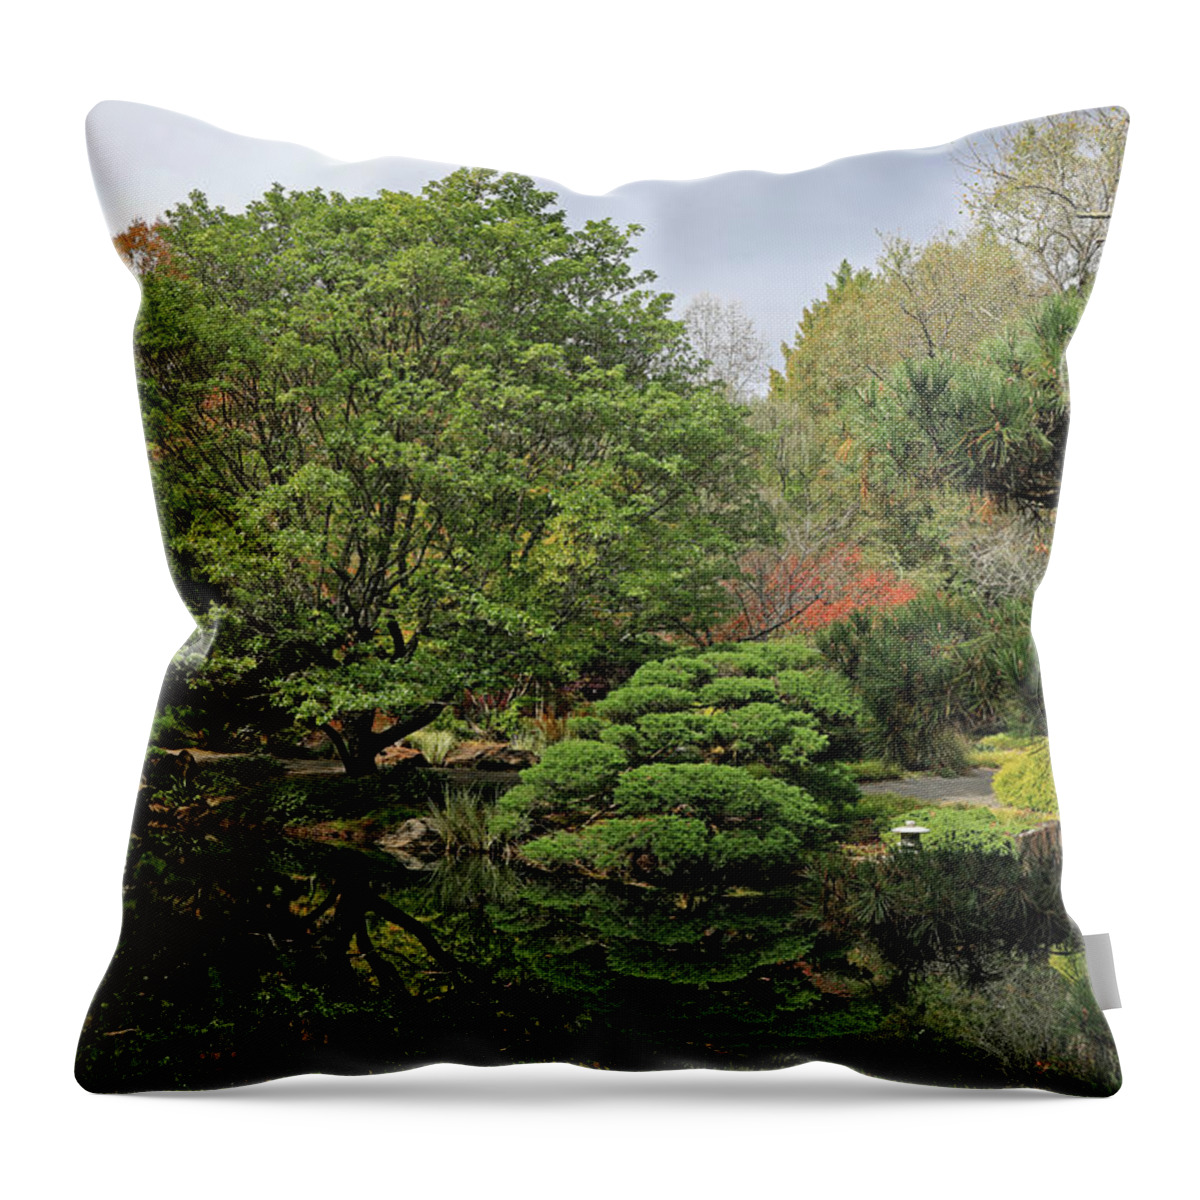 Japanese Gardens Throw Pillow featuring the photograph Japanese Gardens 3 by Richard Krebs